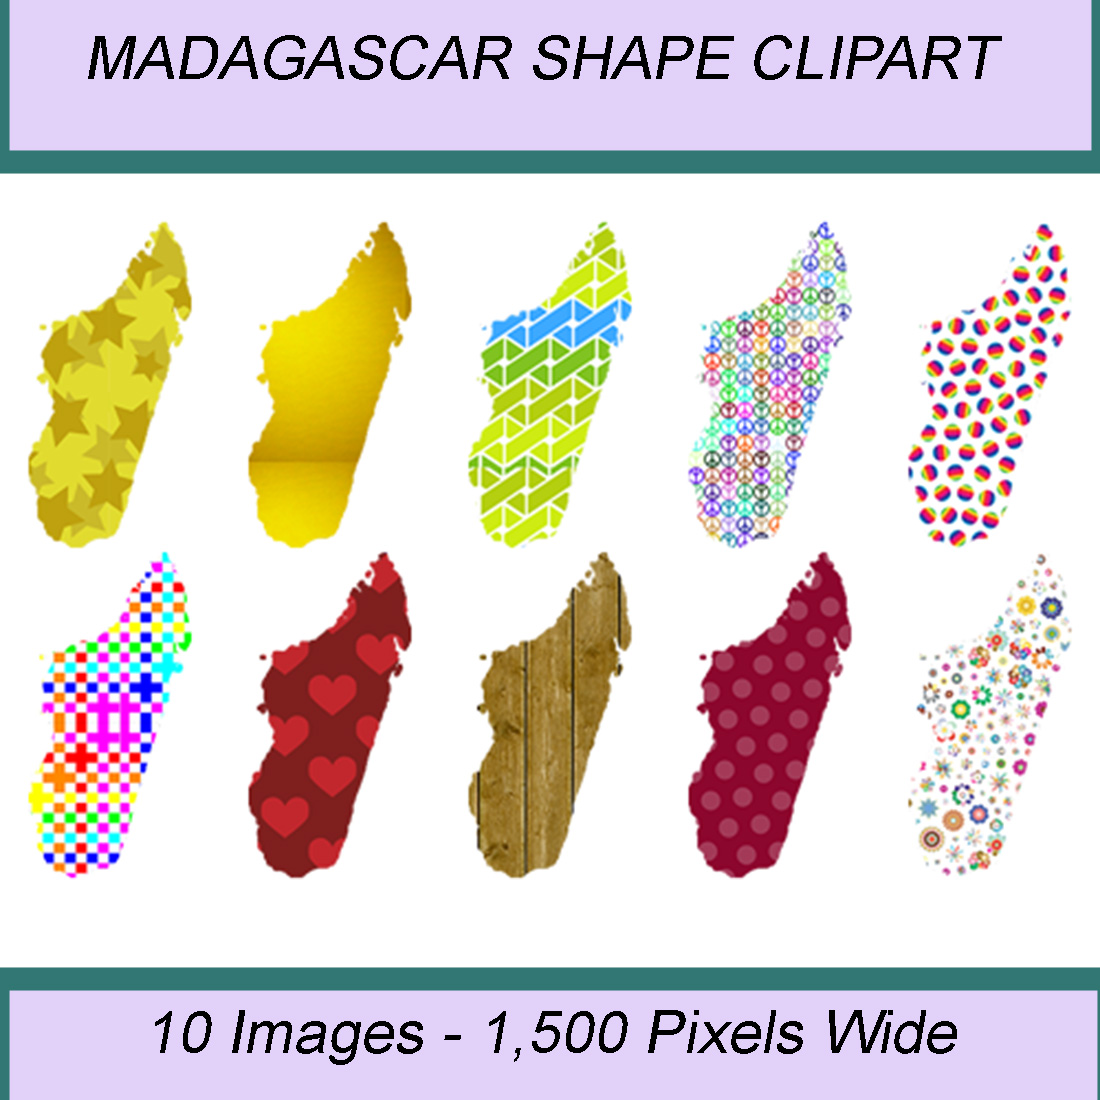 MADAGASCAR SHAPE CLIPART ICONS cover image.